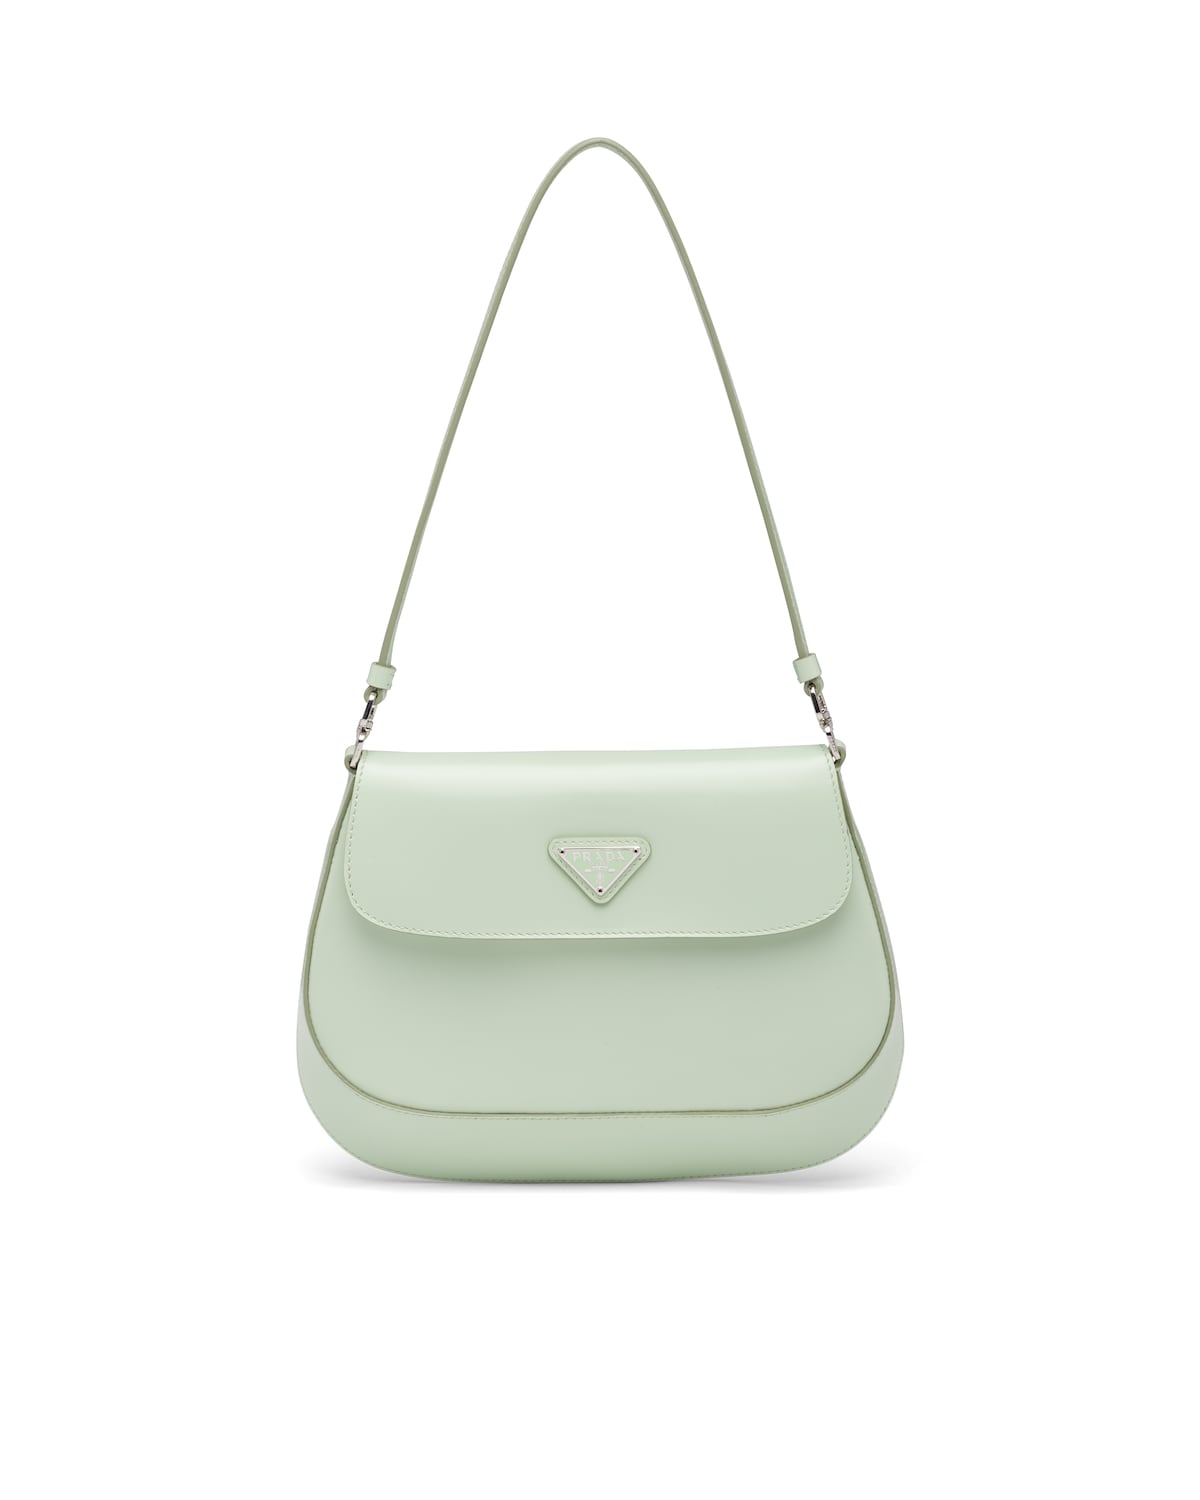 Prada Bags 2021 - Prada Australia-Prada Handbags Online Store